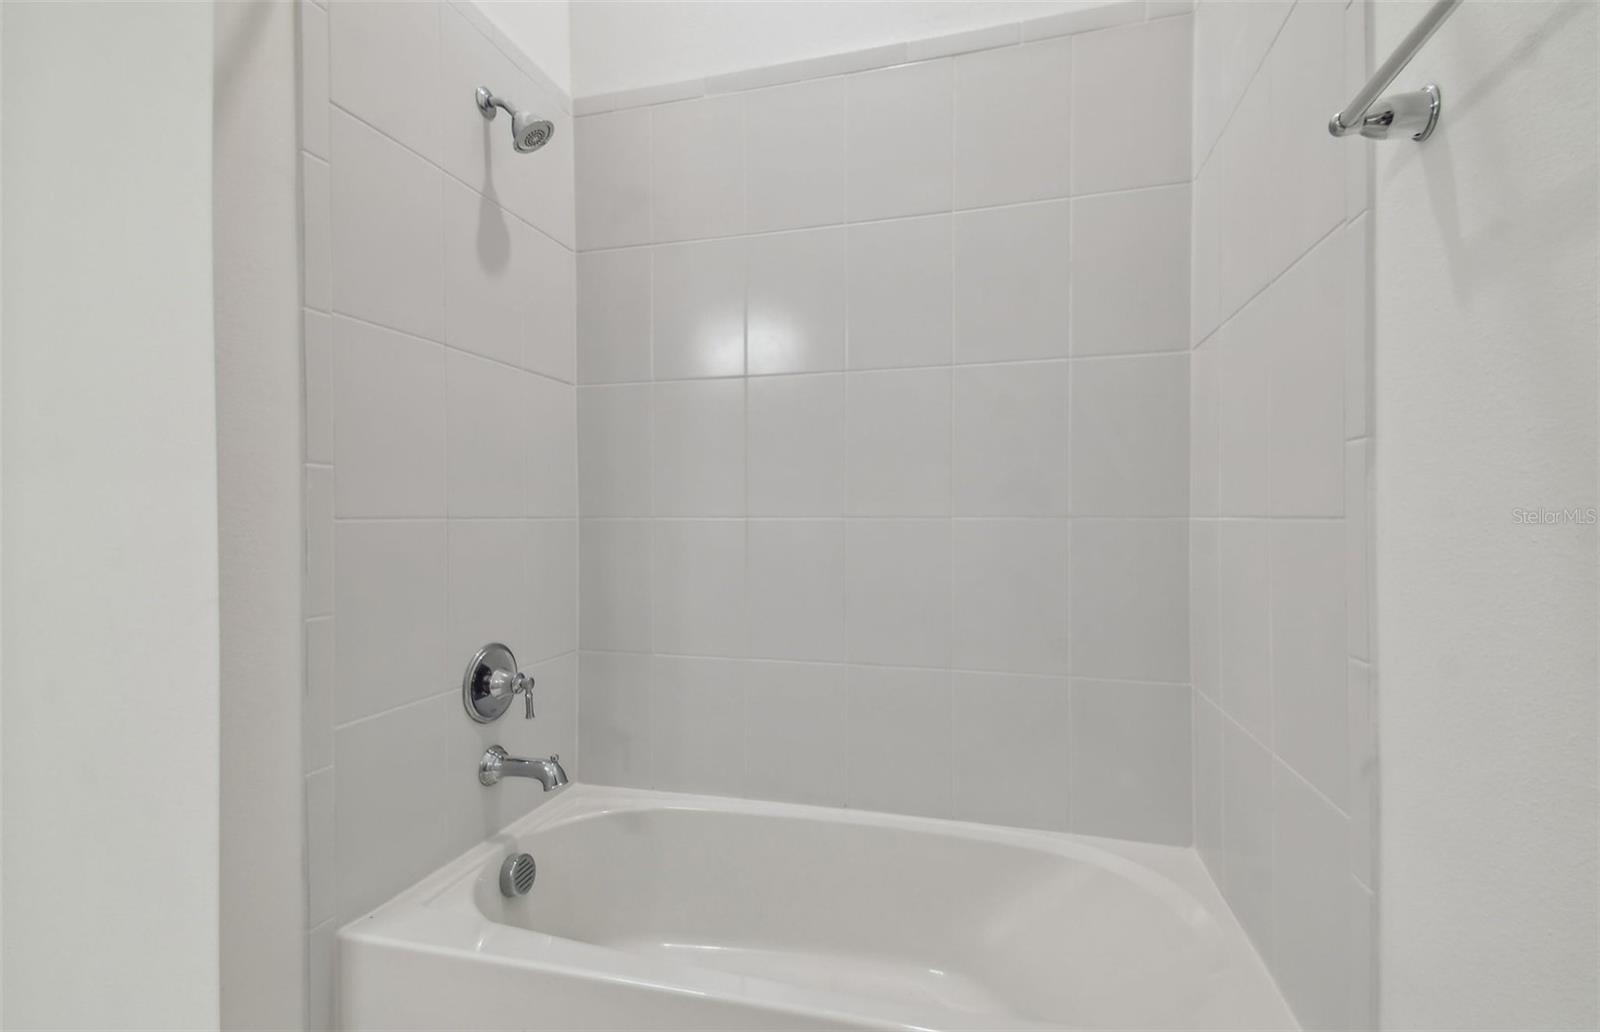 Secondary Bath Tub & Shower Combo